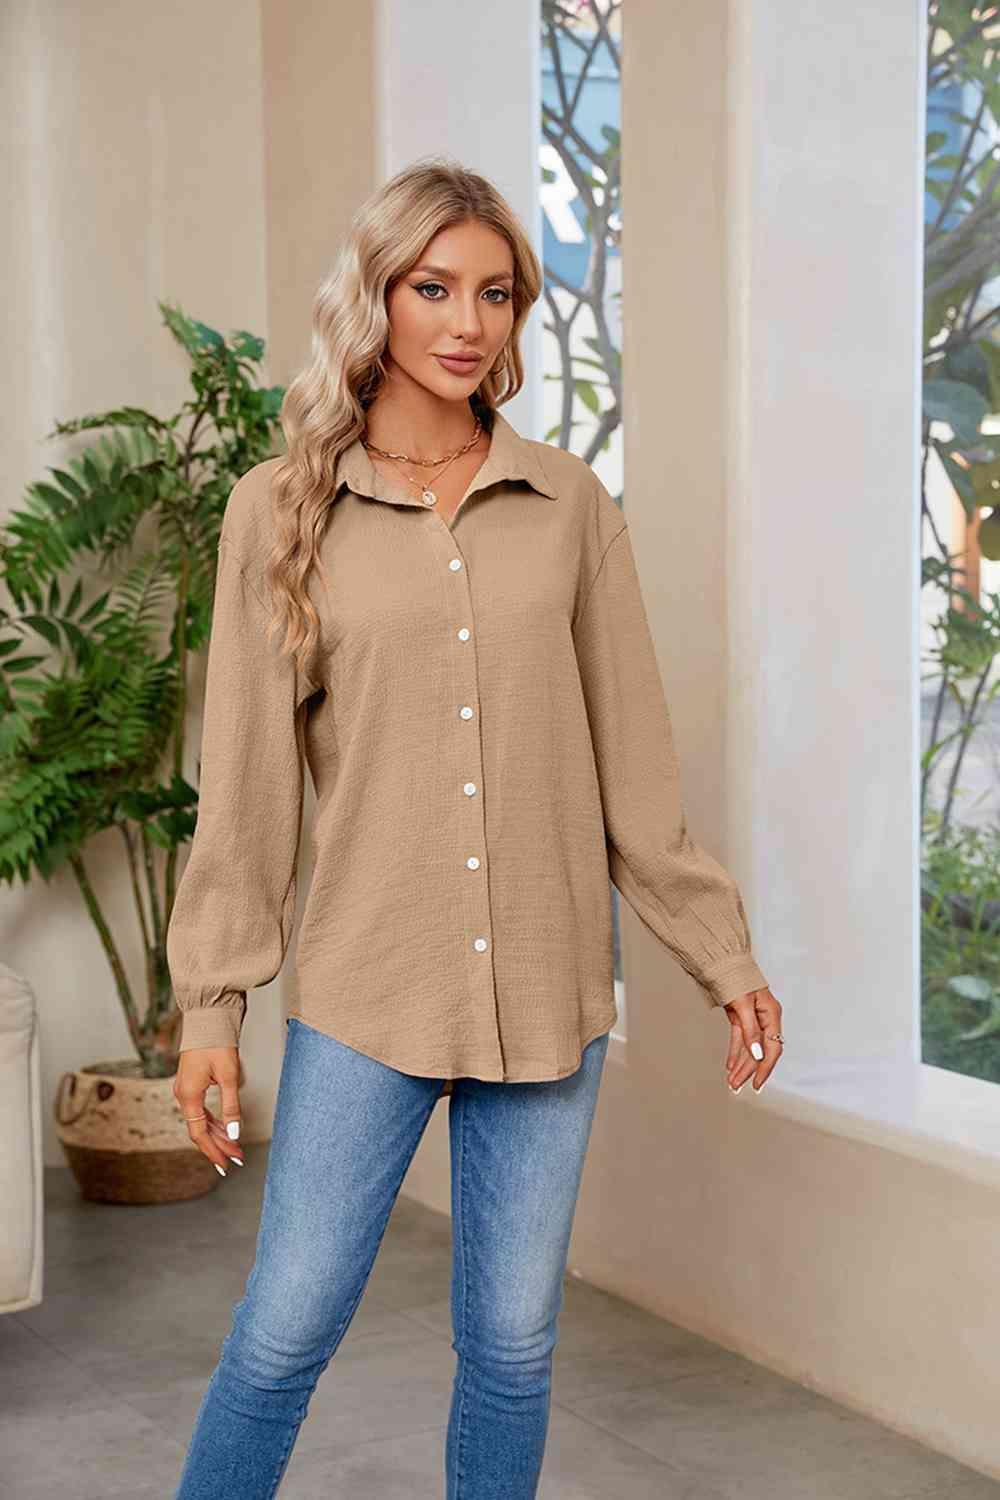 Bona Fide Fashion - Collared Neck Buttoned Long Sleeve Shirt - Women Fashion - Bona Fide Fashion